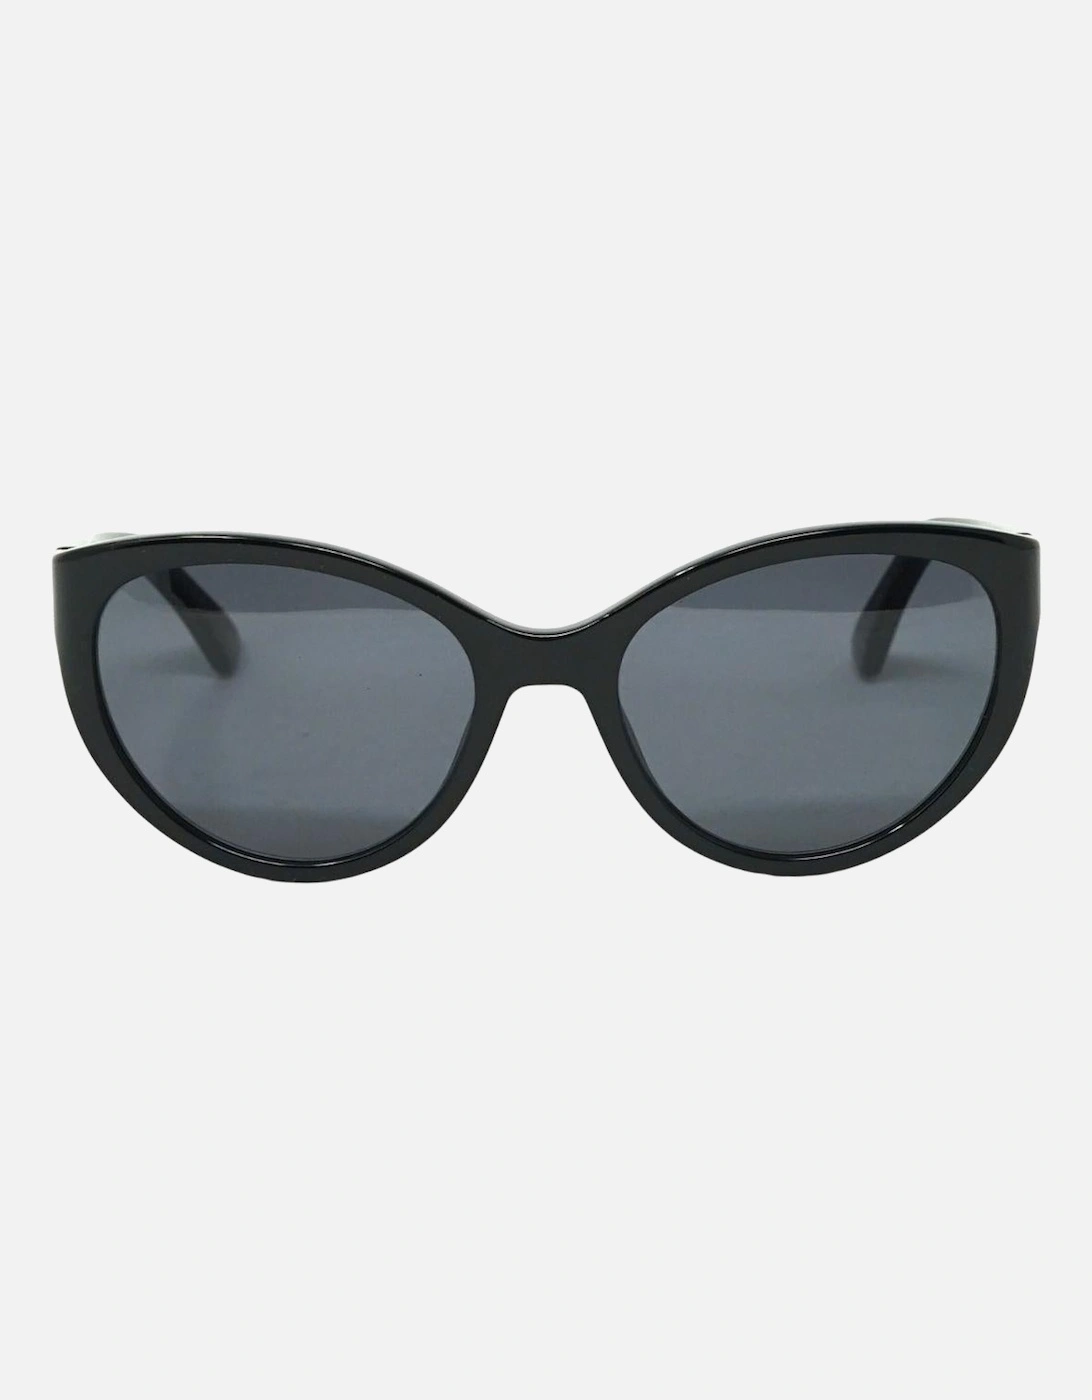 MOS065 807 IR 807 Black Sunglasses, 4 of 3